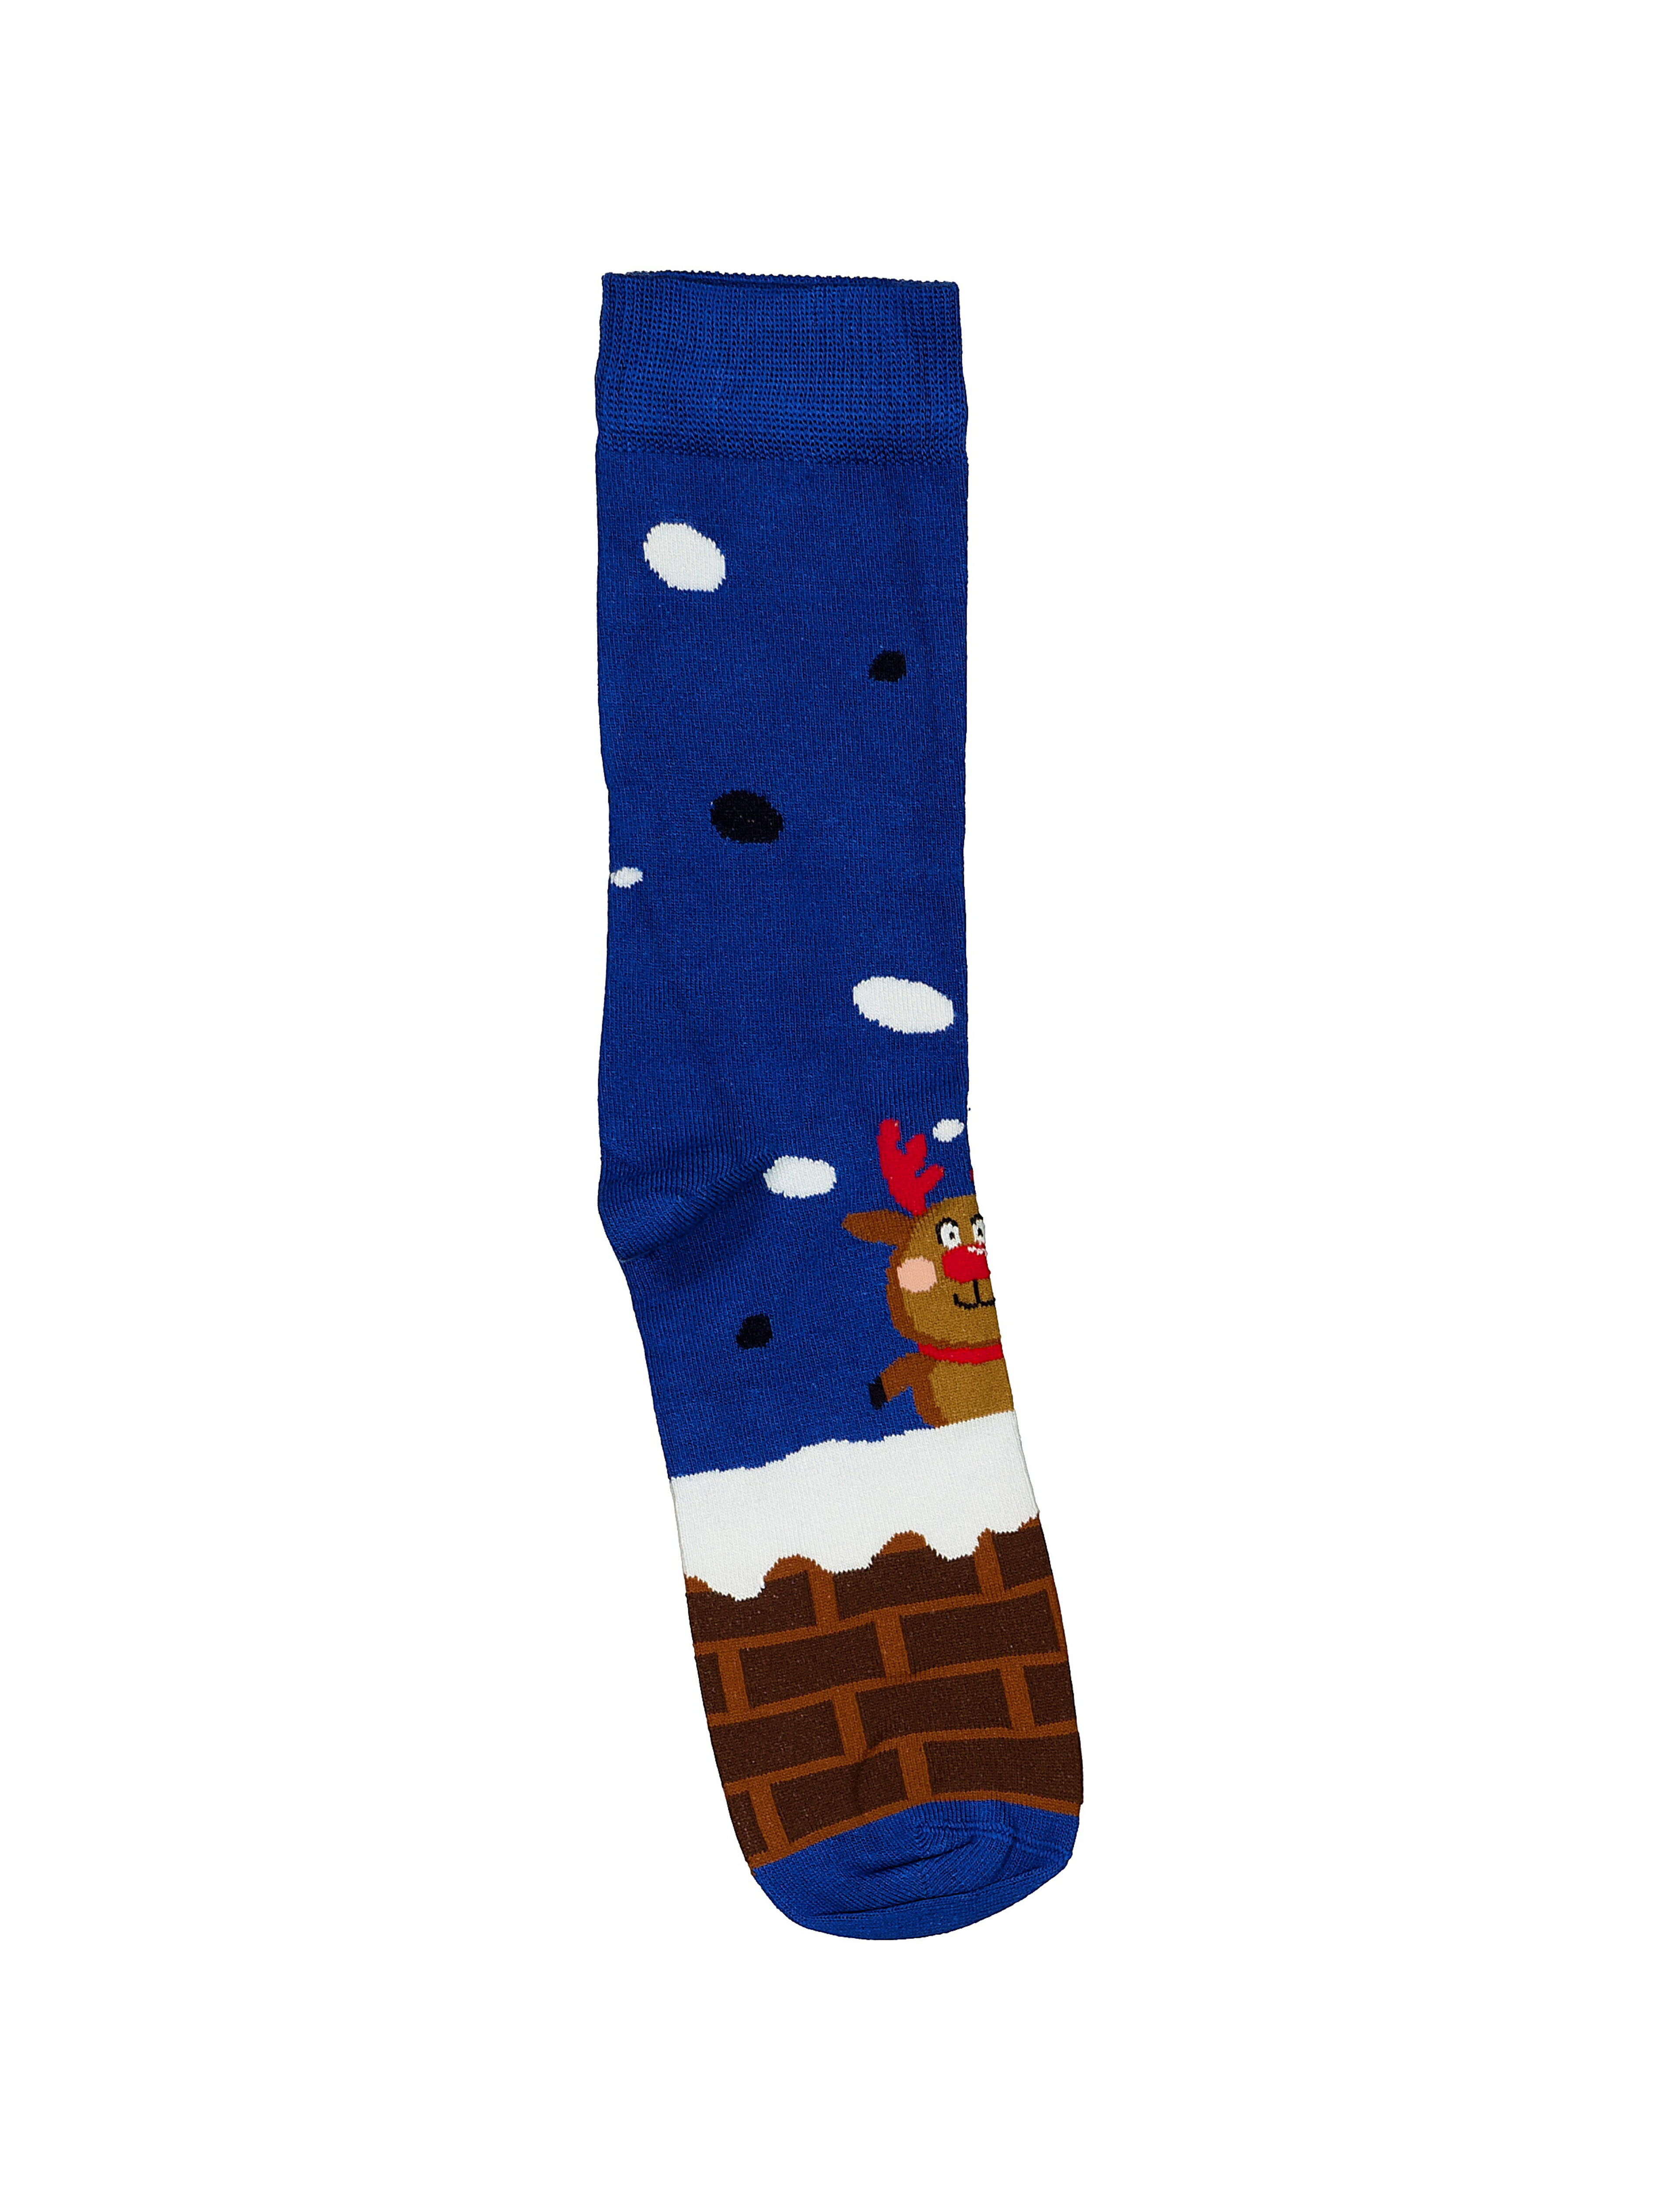 Socks 30-991025